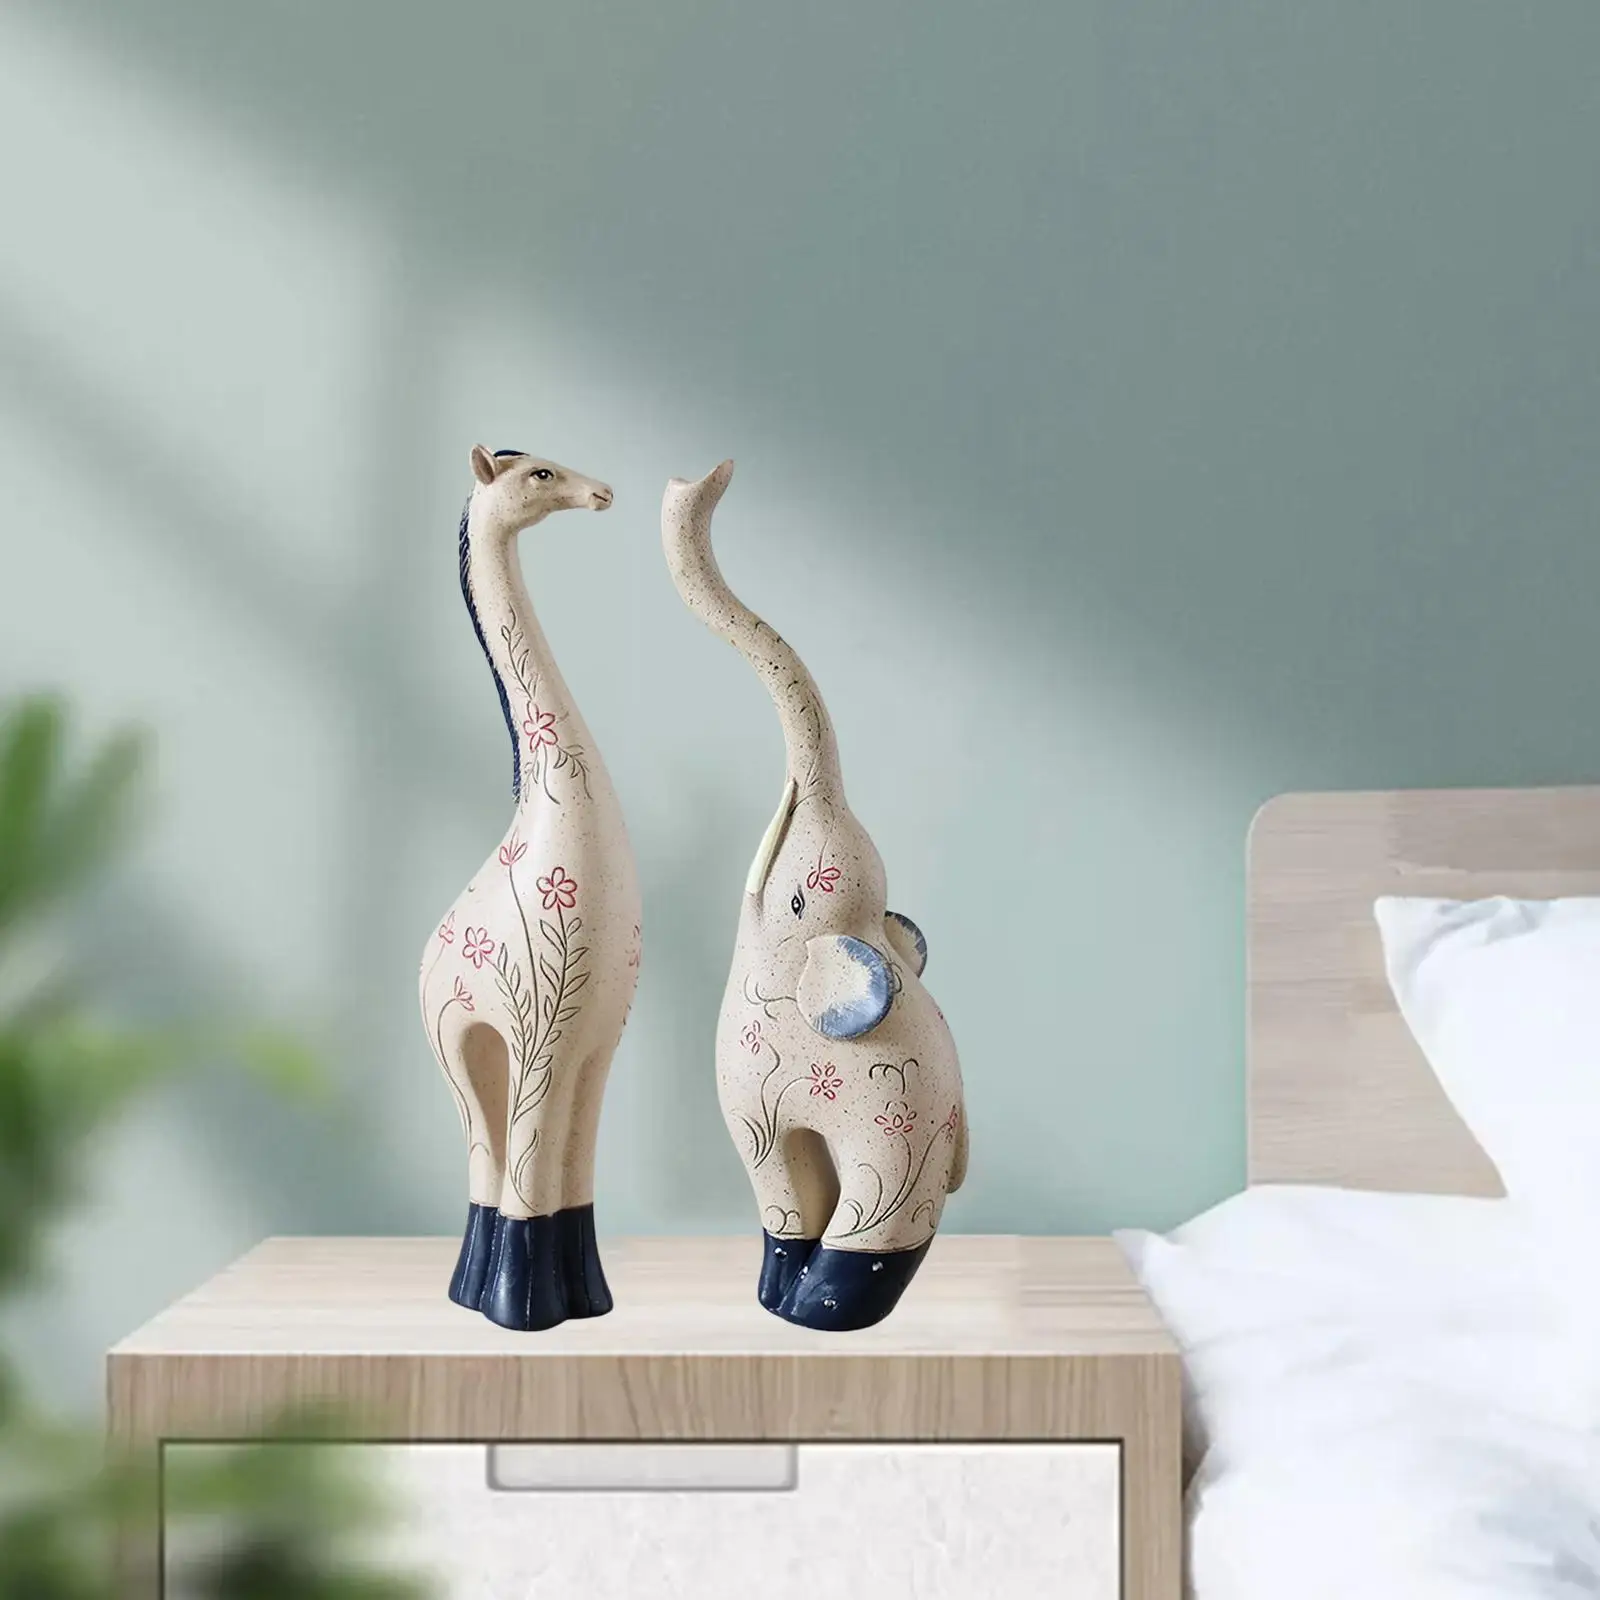 Resin Animal Statue Sculpture Decorative Accent Craft Ornaments Figurine for Office Home Decoration Decor Kitchen